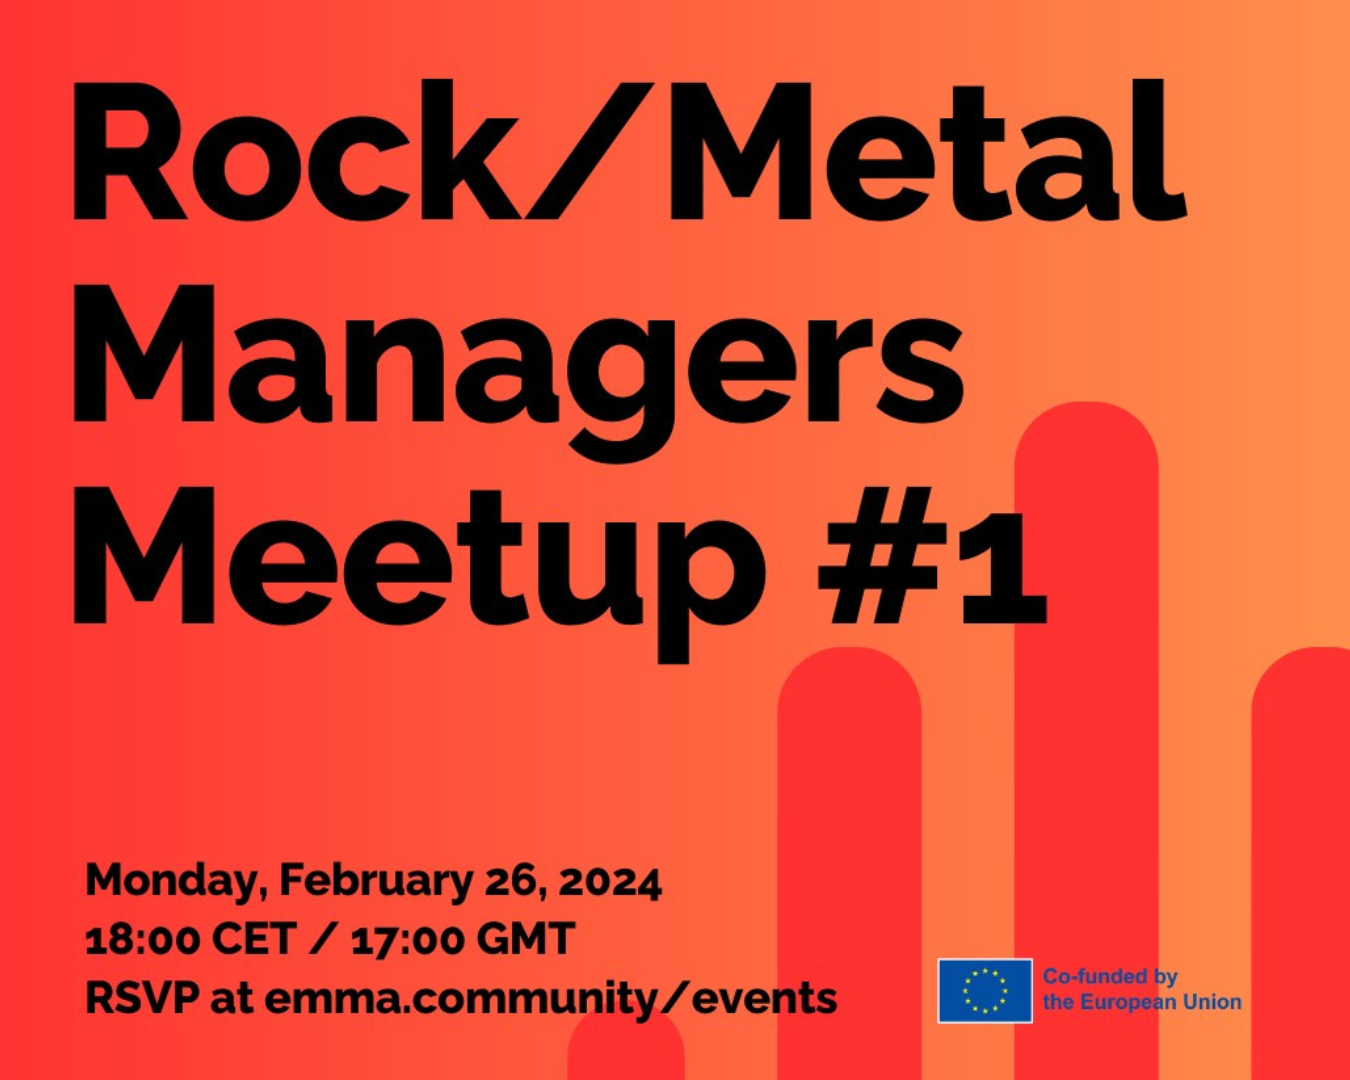 EMMA Rock/Metal Managers Meetup